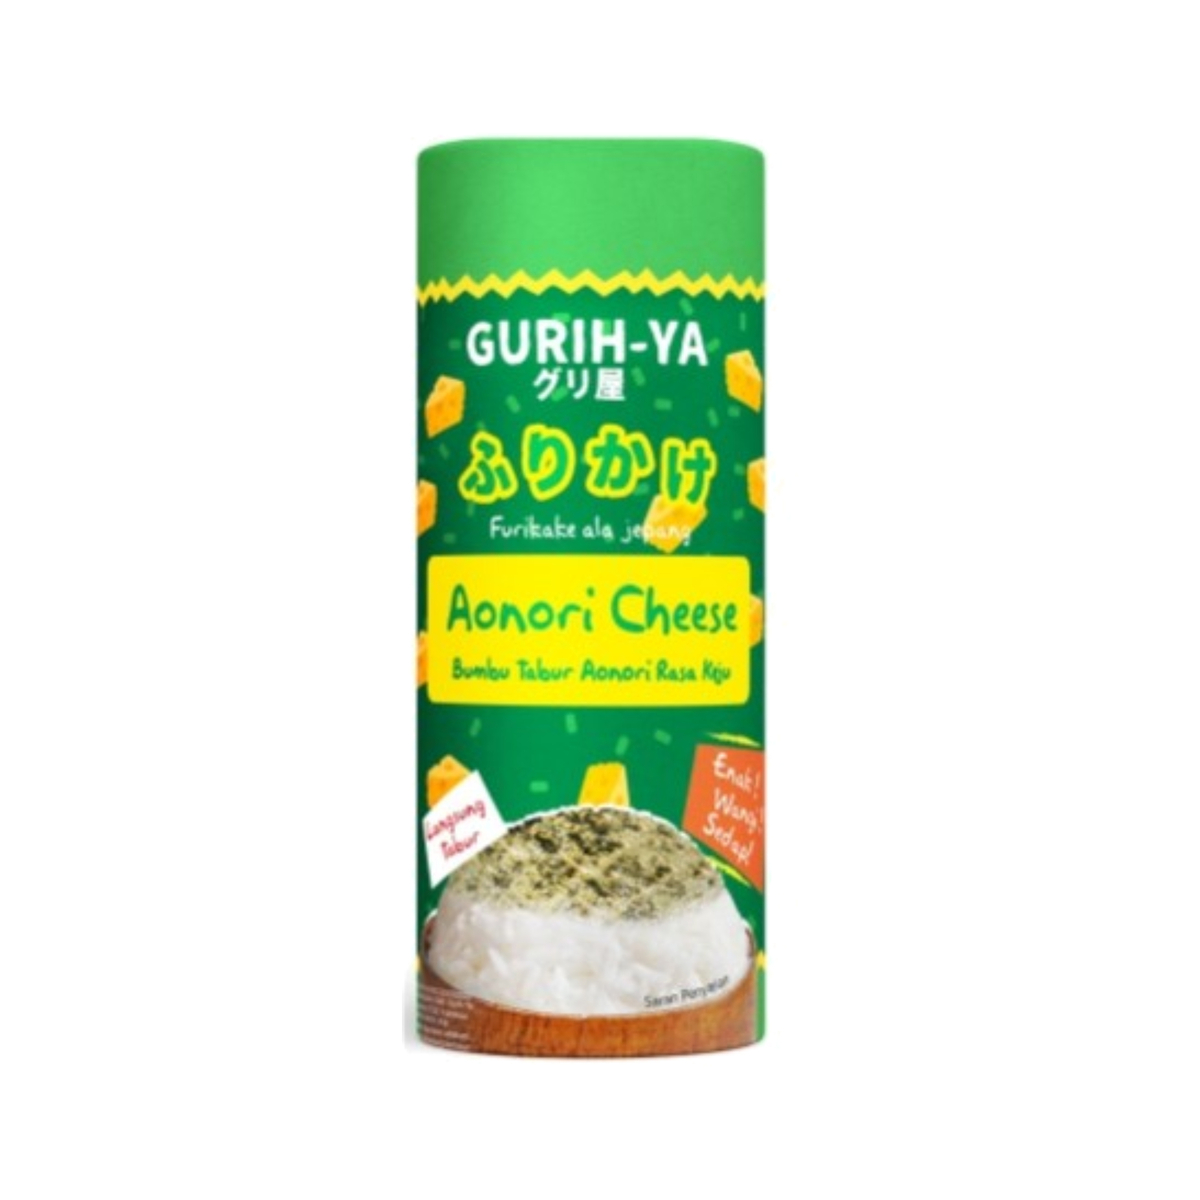 Gurih-Ya Aonori Cheese Botol 45g